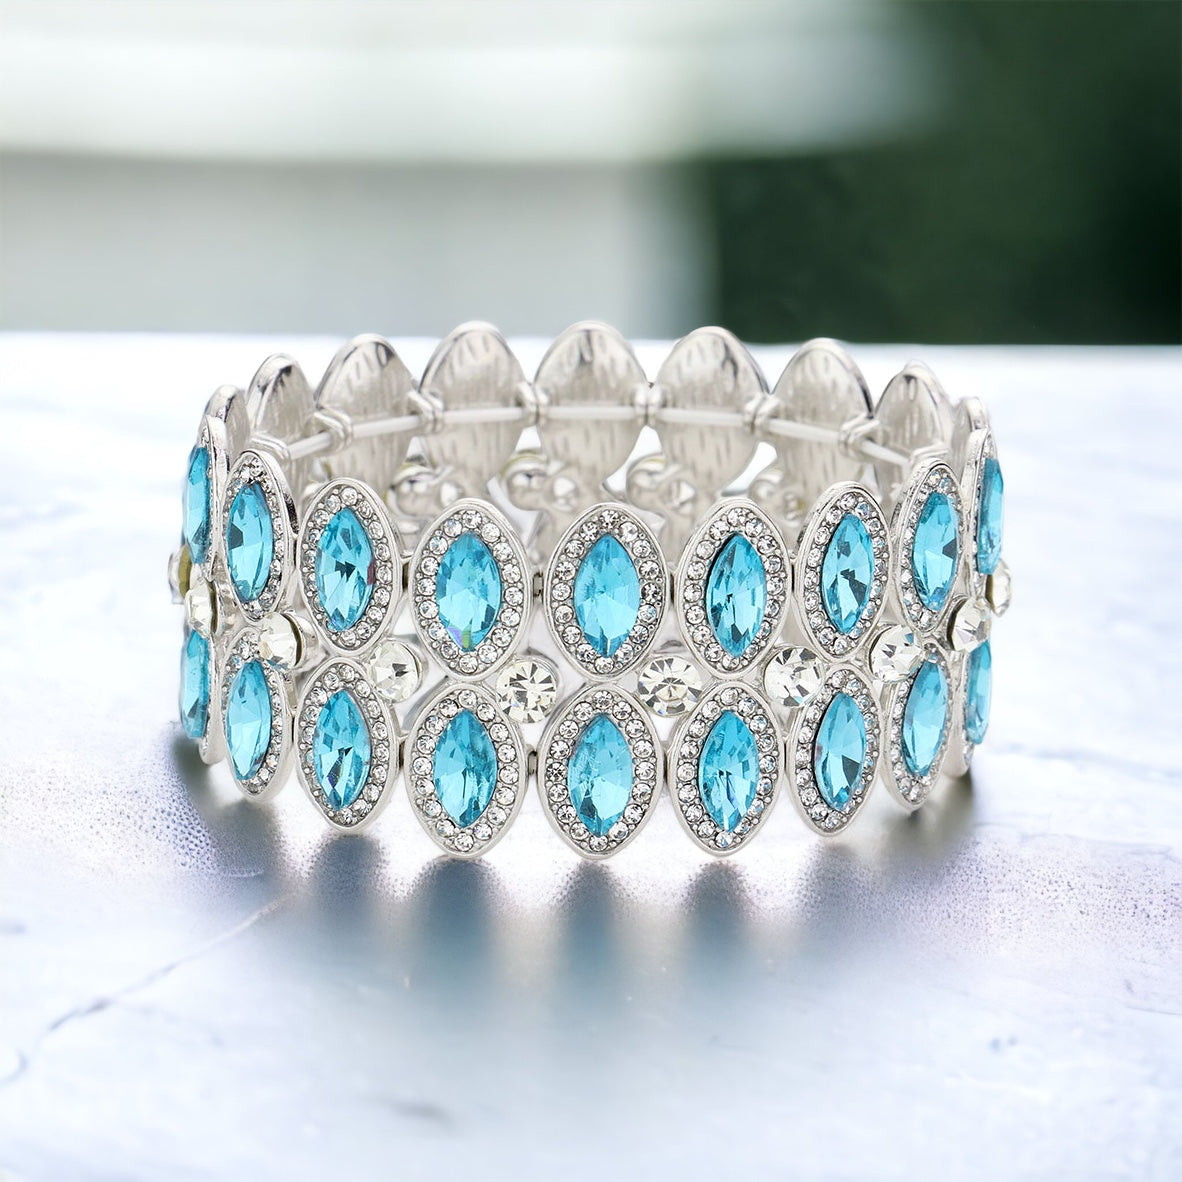 Kayla - clear teal marquise crystal rhinestone stretch bracelet